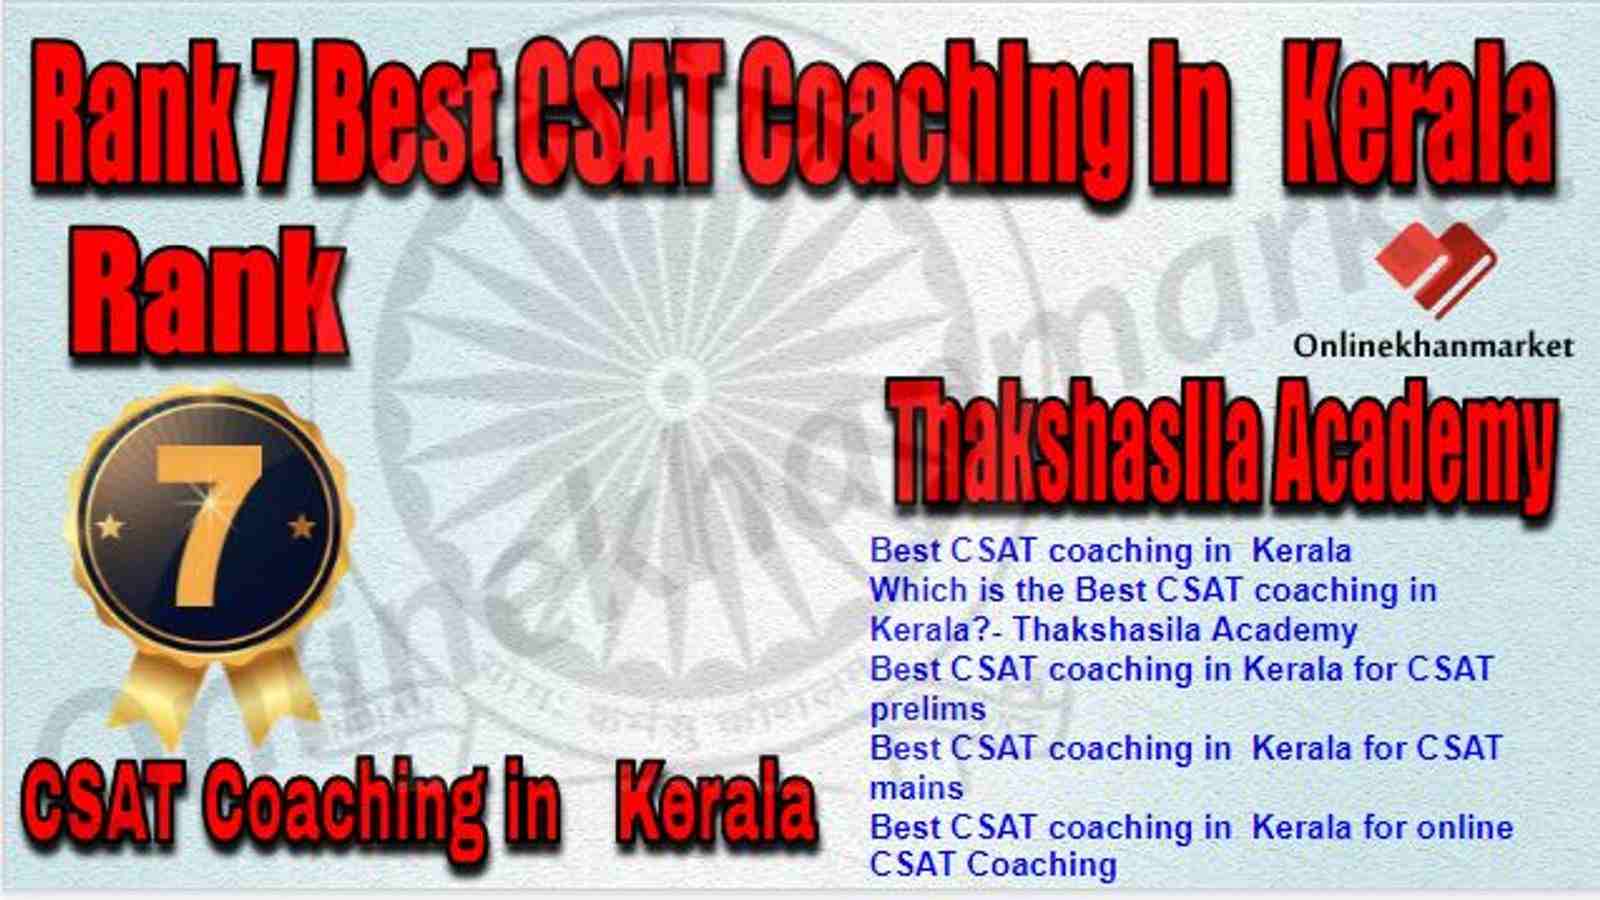 Rank 7 Best CSAT Coaching in kerala